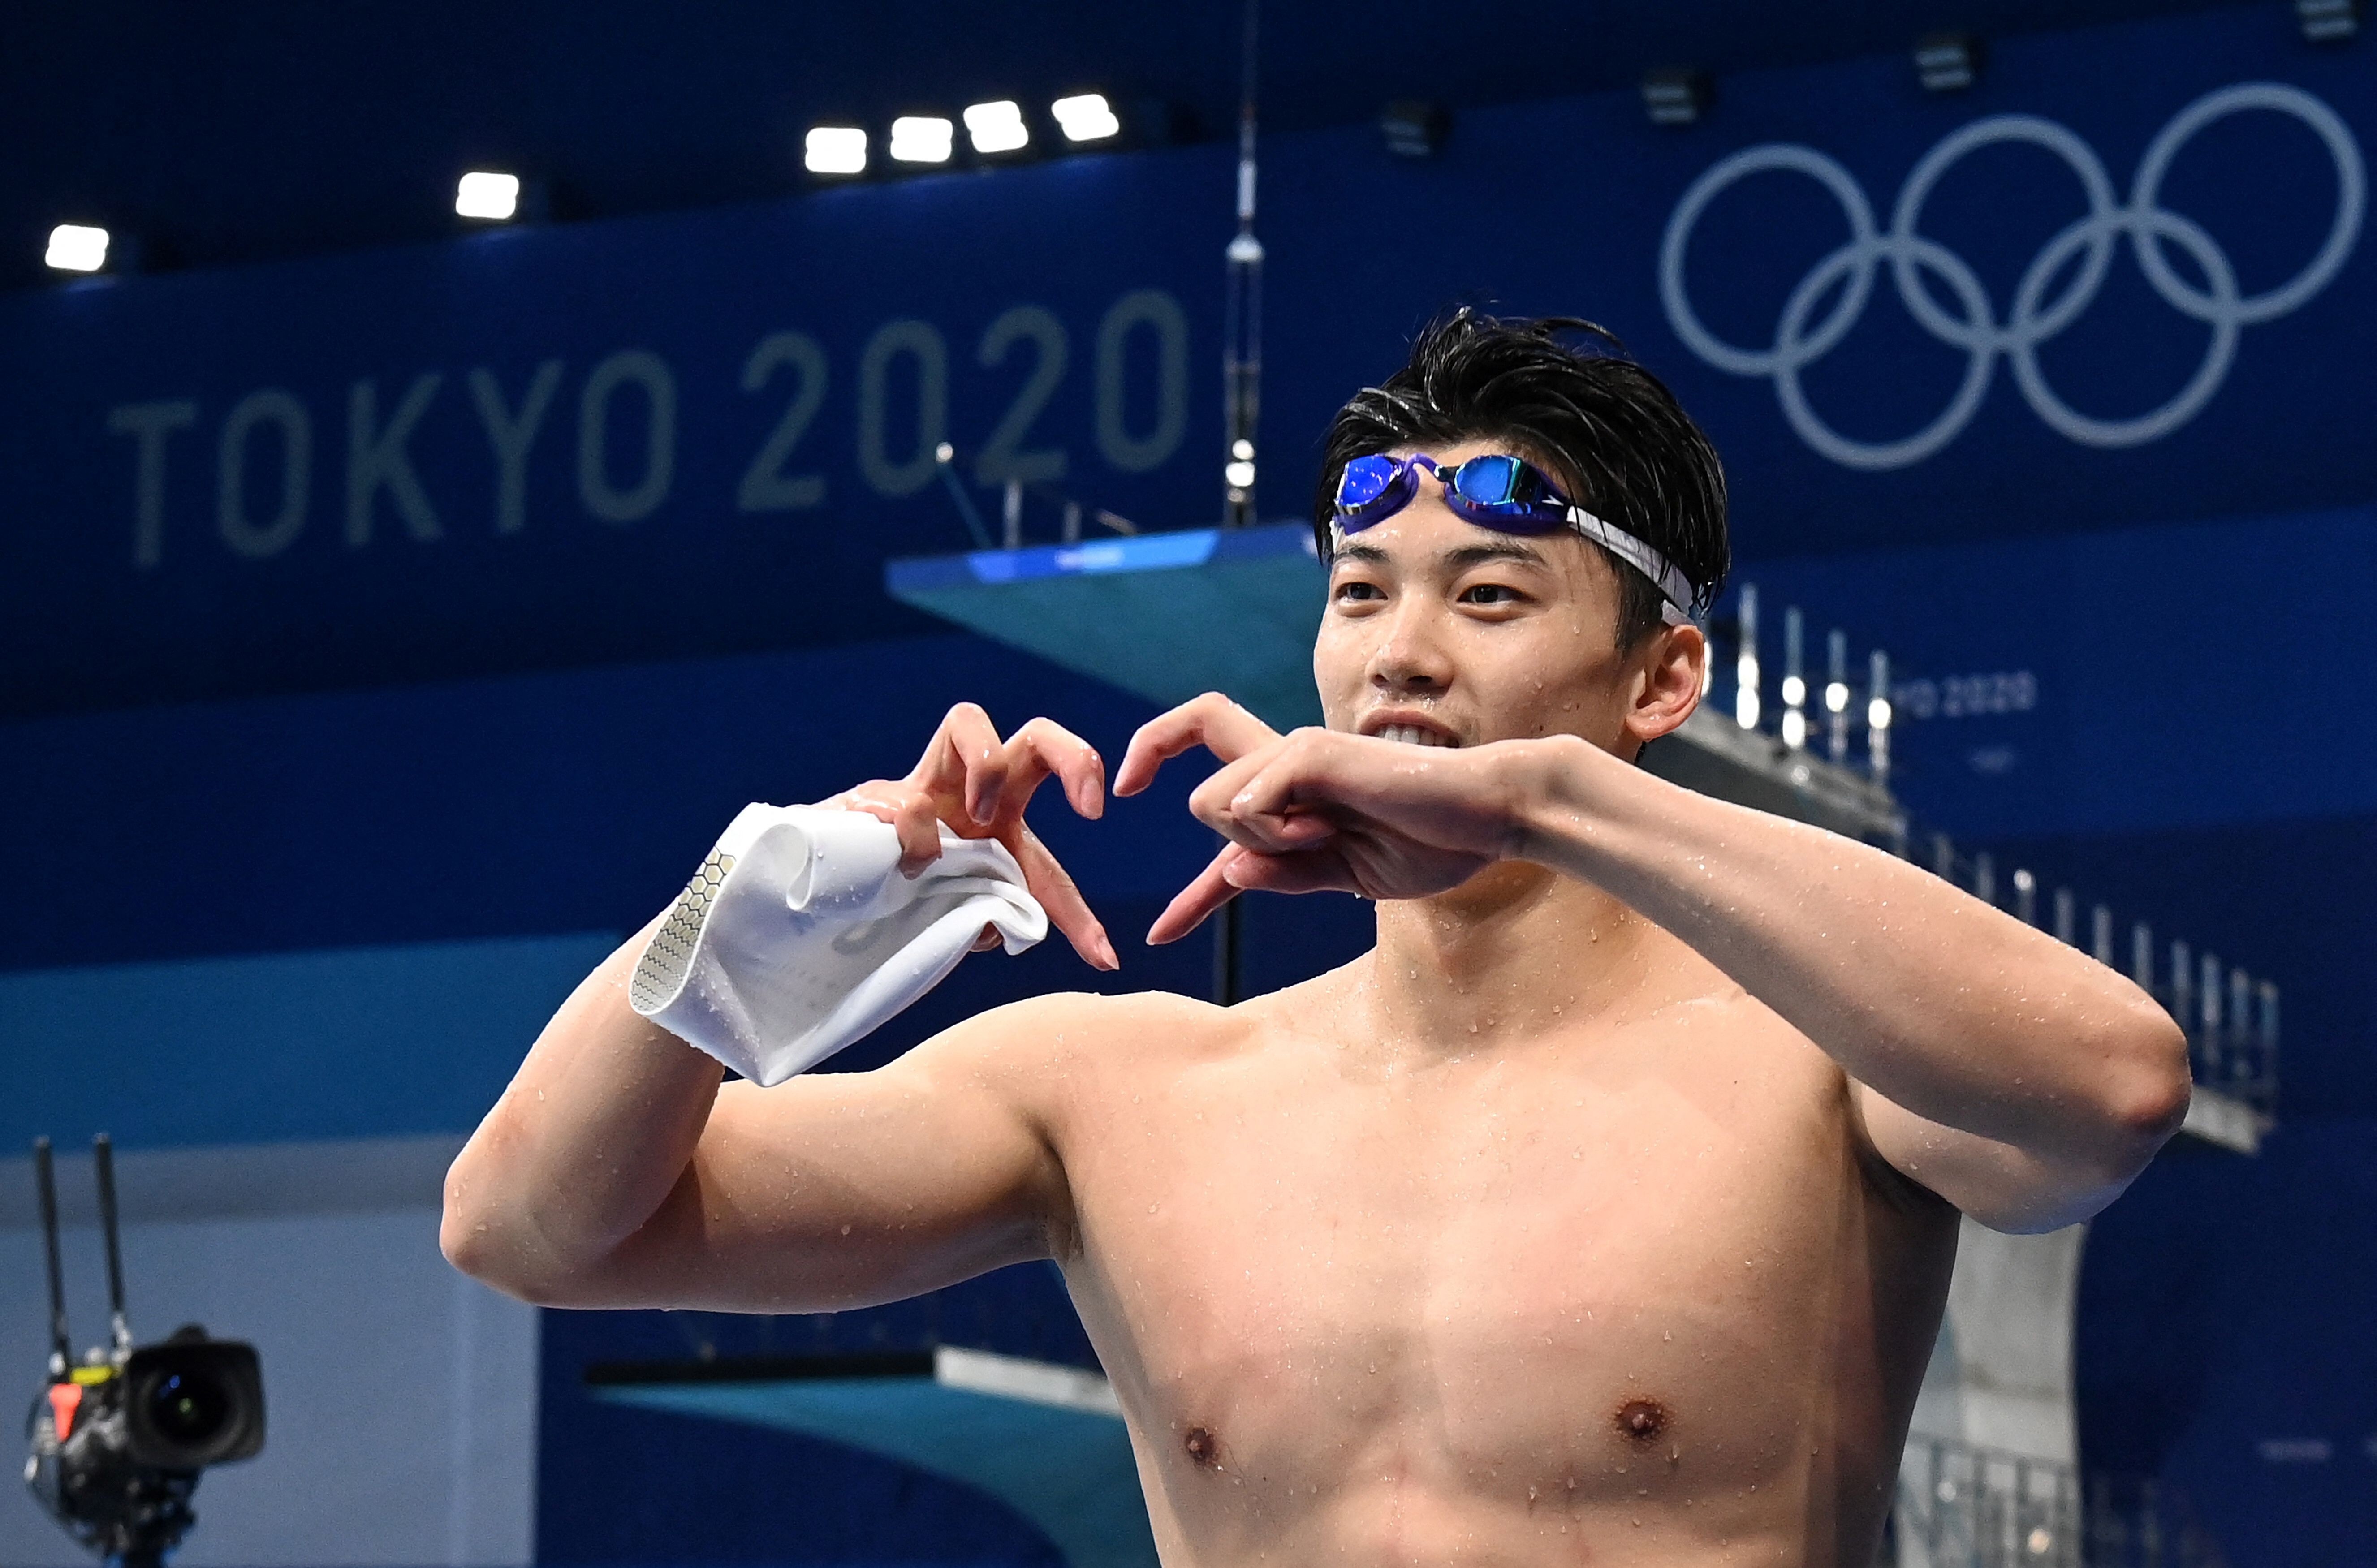 China's Wang Shun celebrates after winning the final of the men's 200m individual medley at the Tokyo 2020 Olympic Games. Photo: AFP